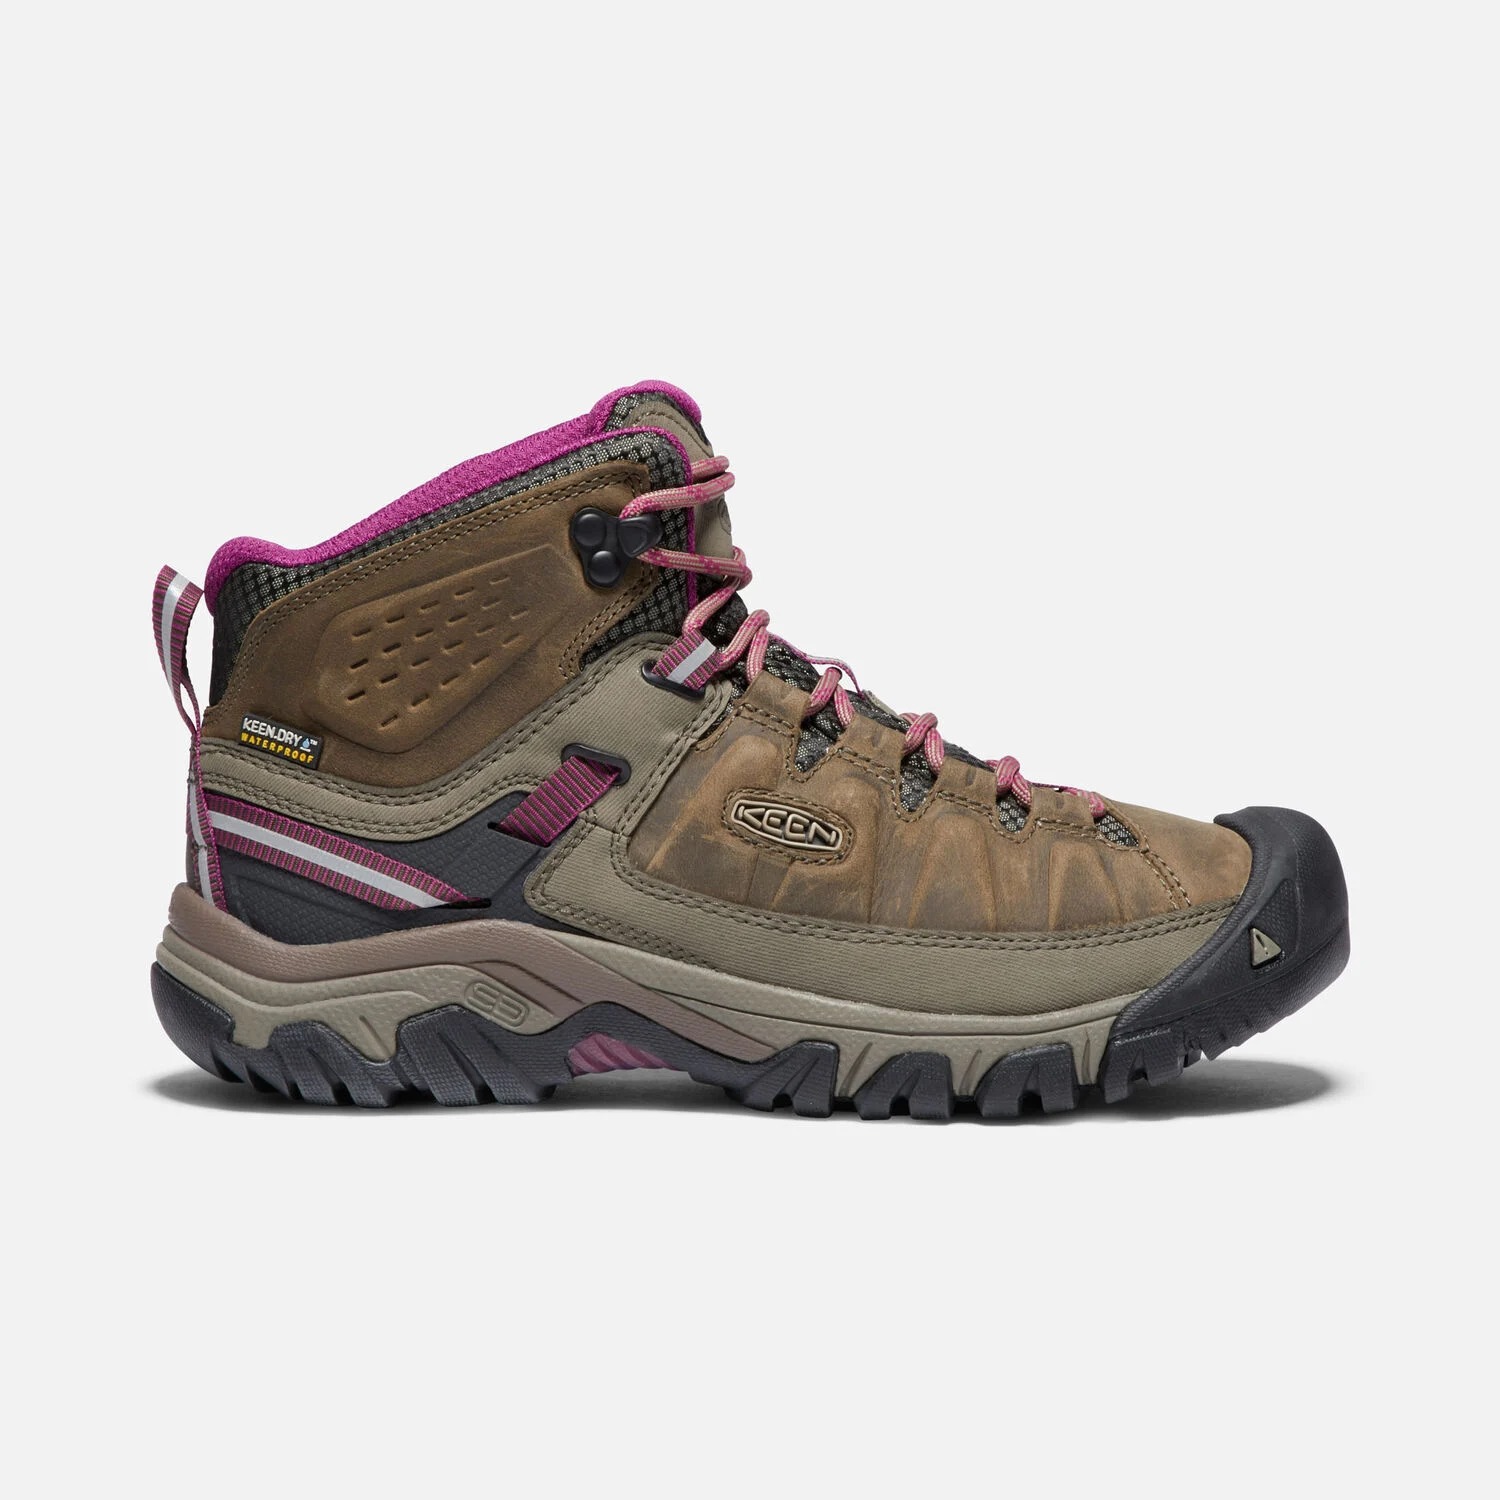 7 Best Hiking Boots For Women & Men
